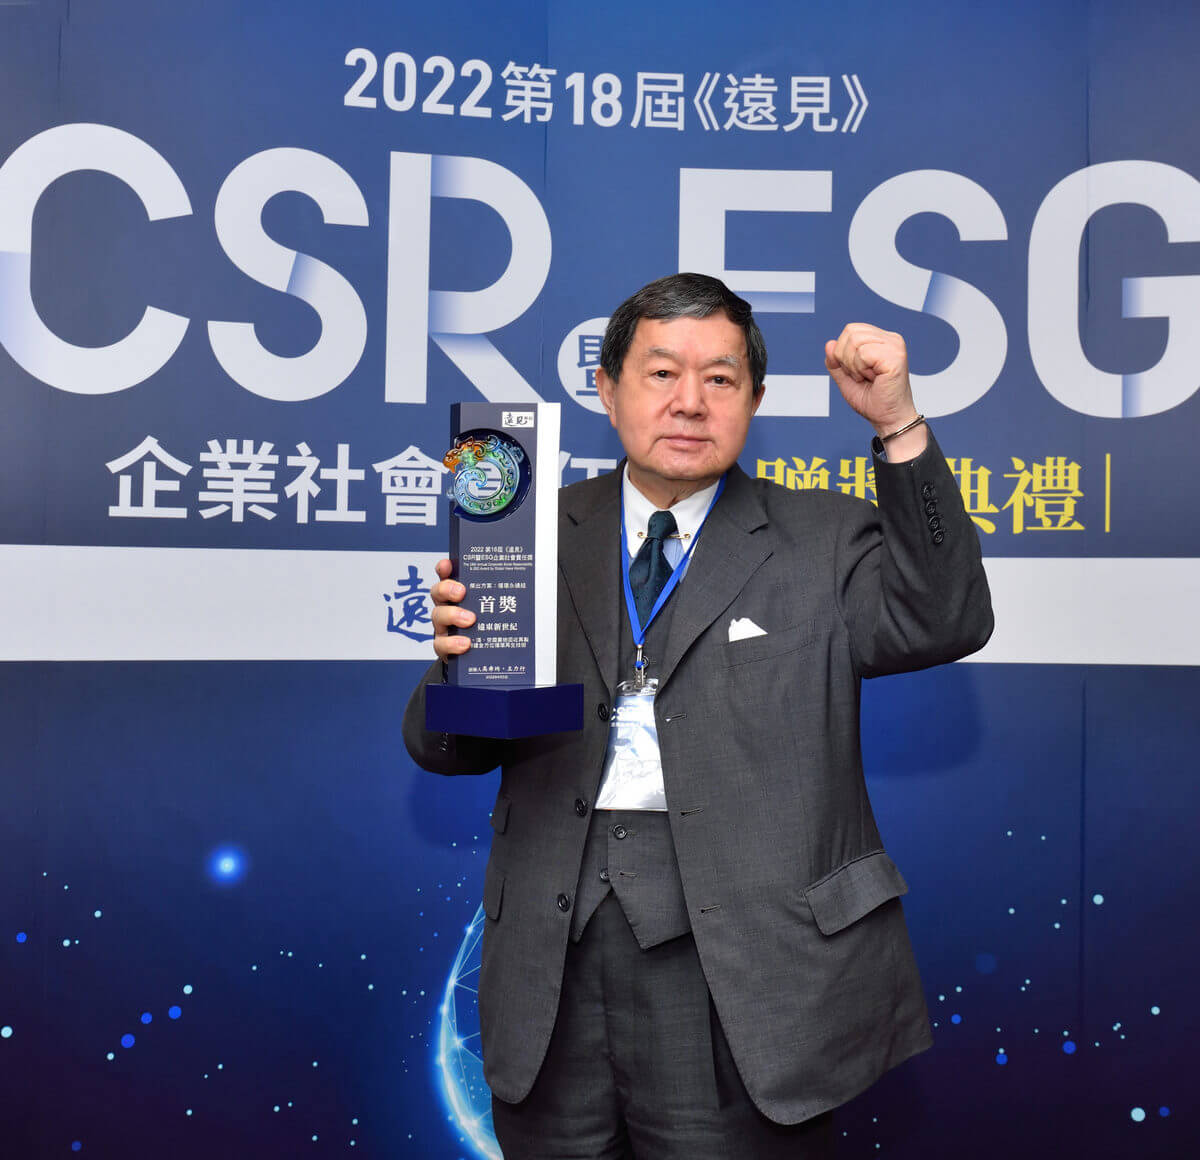 FEG has won five GVM CSR awards